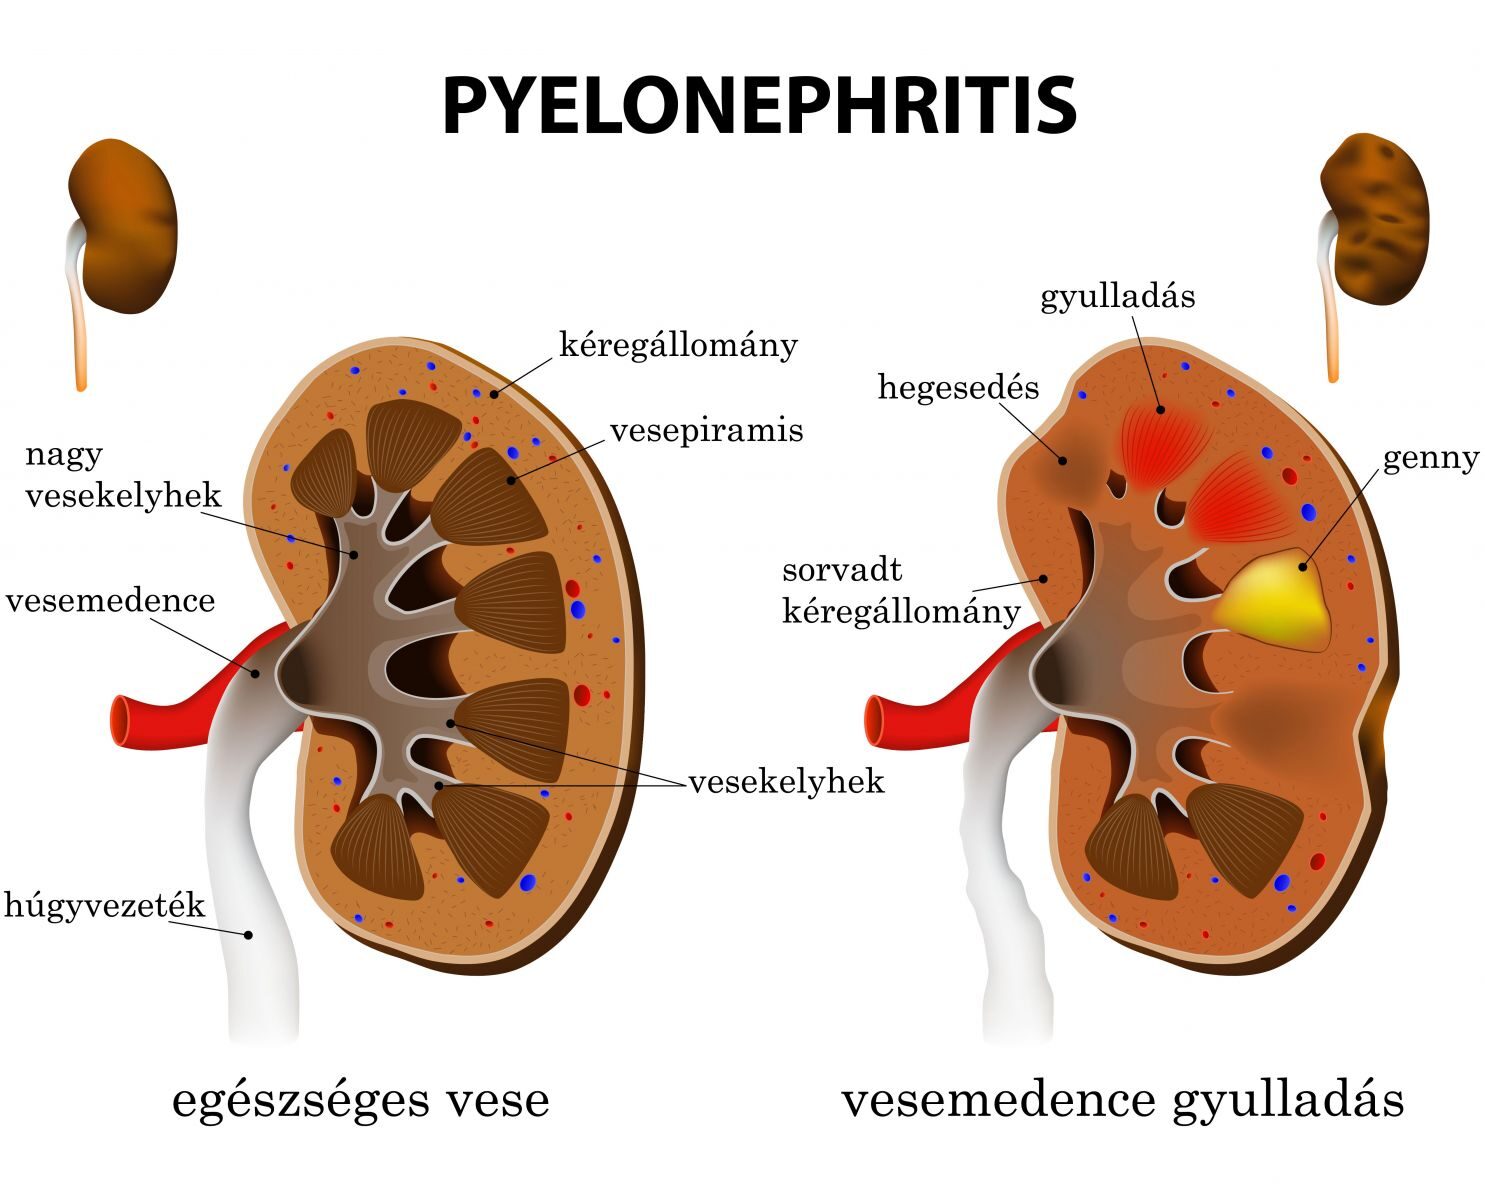 Vesemedence-gyulladás (pyelonephritis)